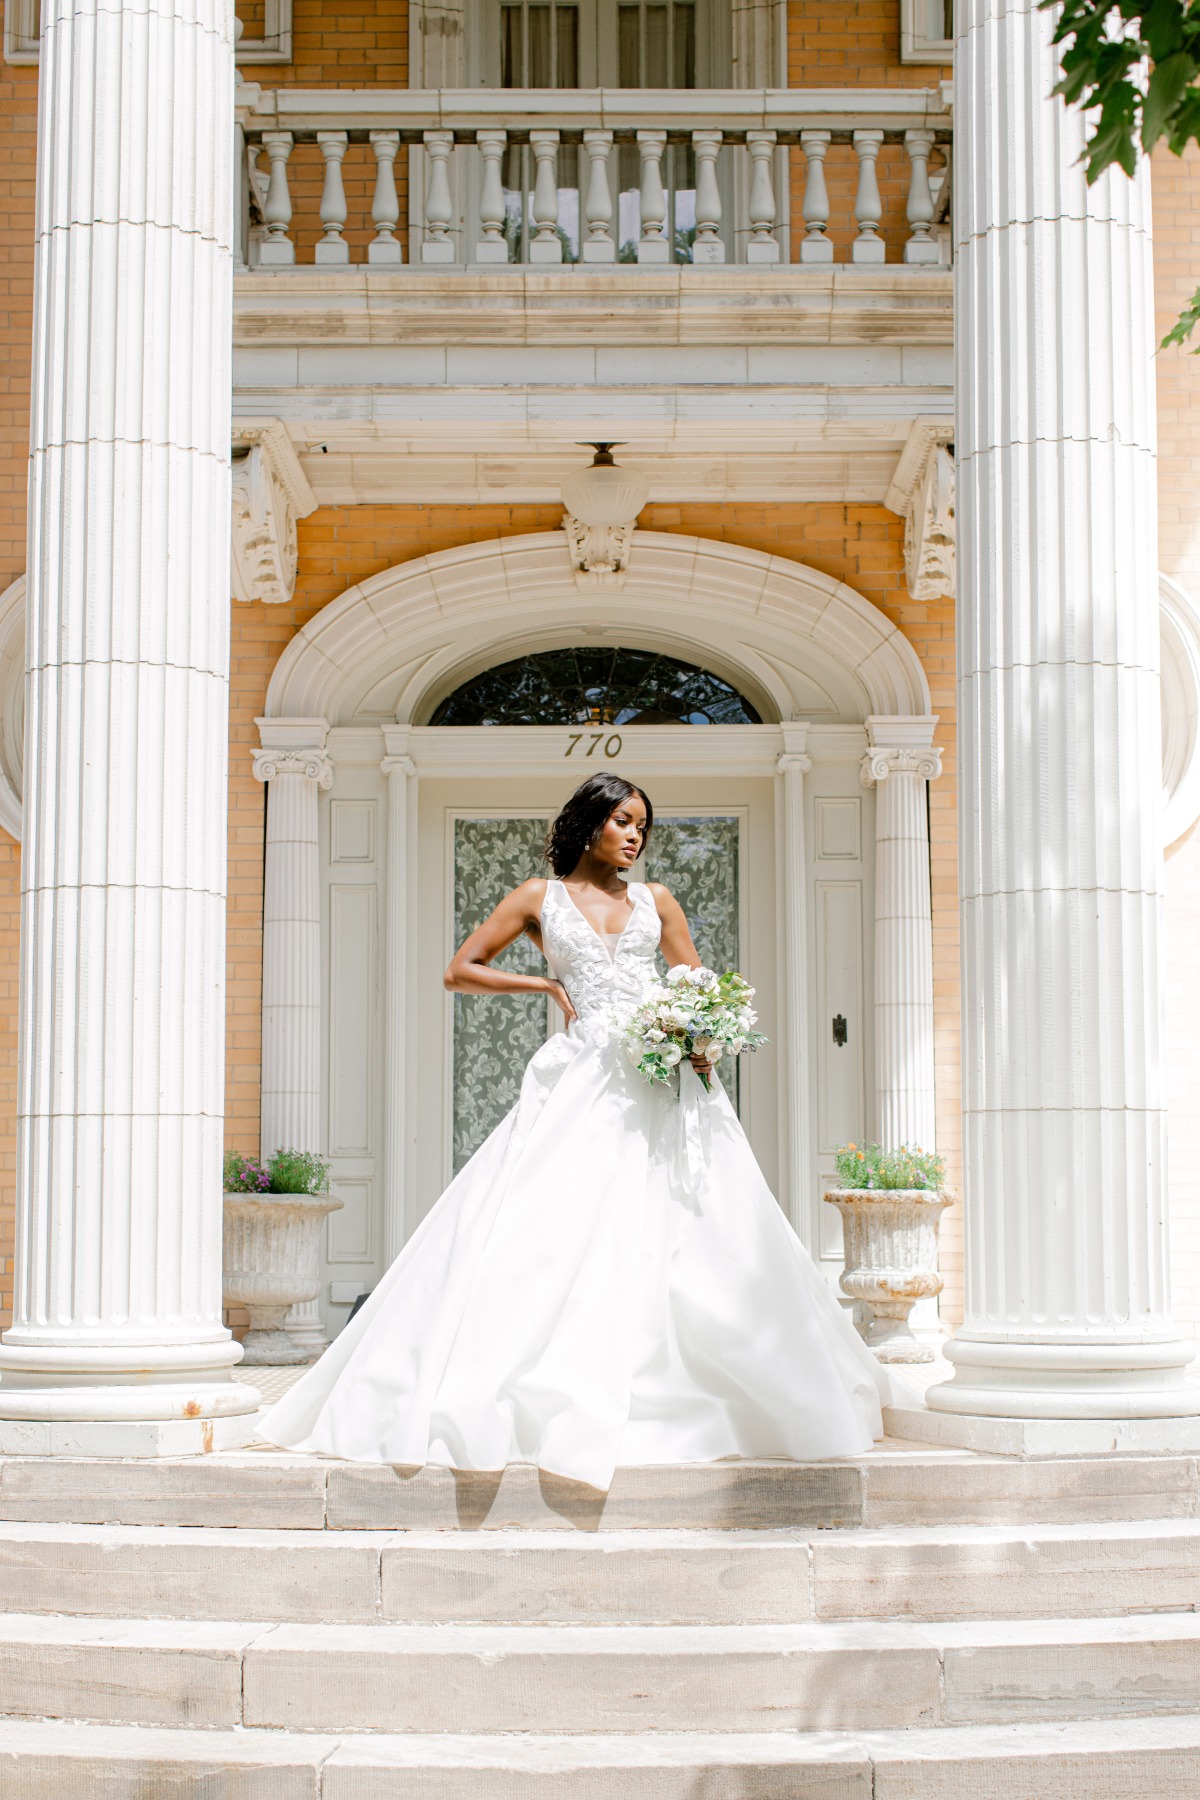 Contemporary Bridal Fashion meets Elegant Old World Mansion